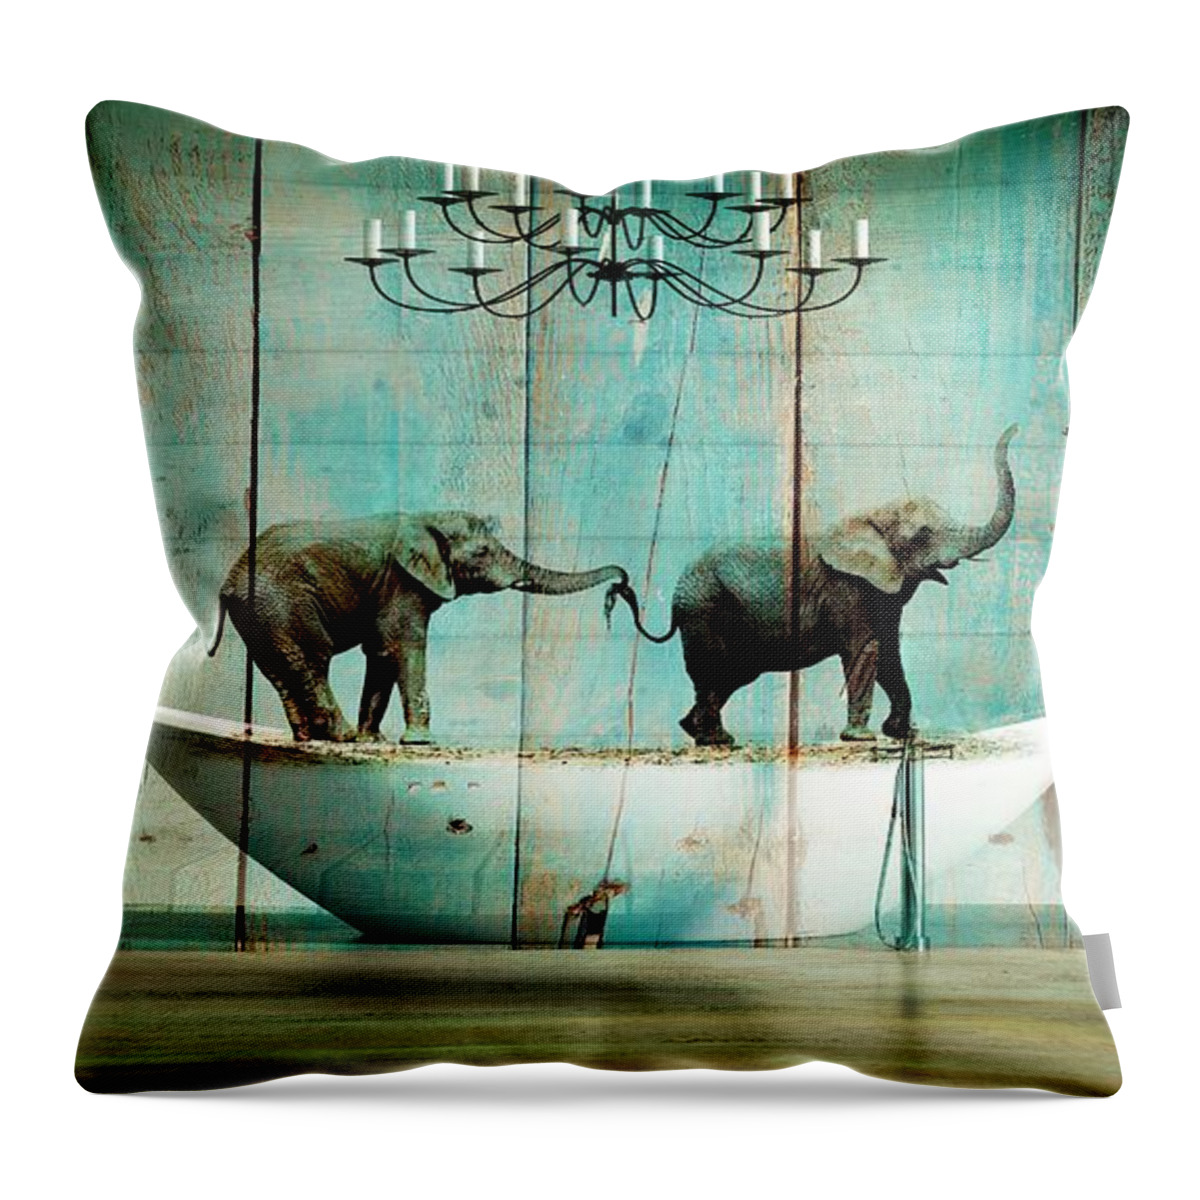 Blue Throw Pillow featuring the digital art Elefantos by Aimelle Ml